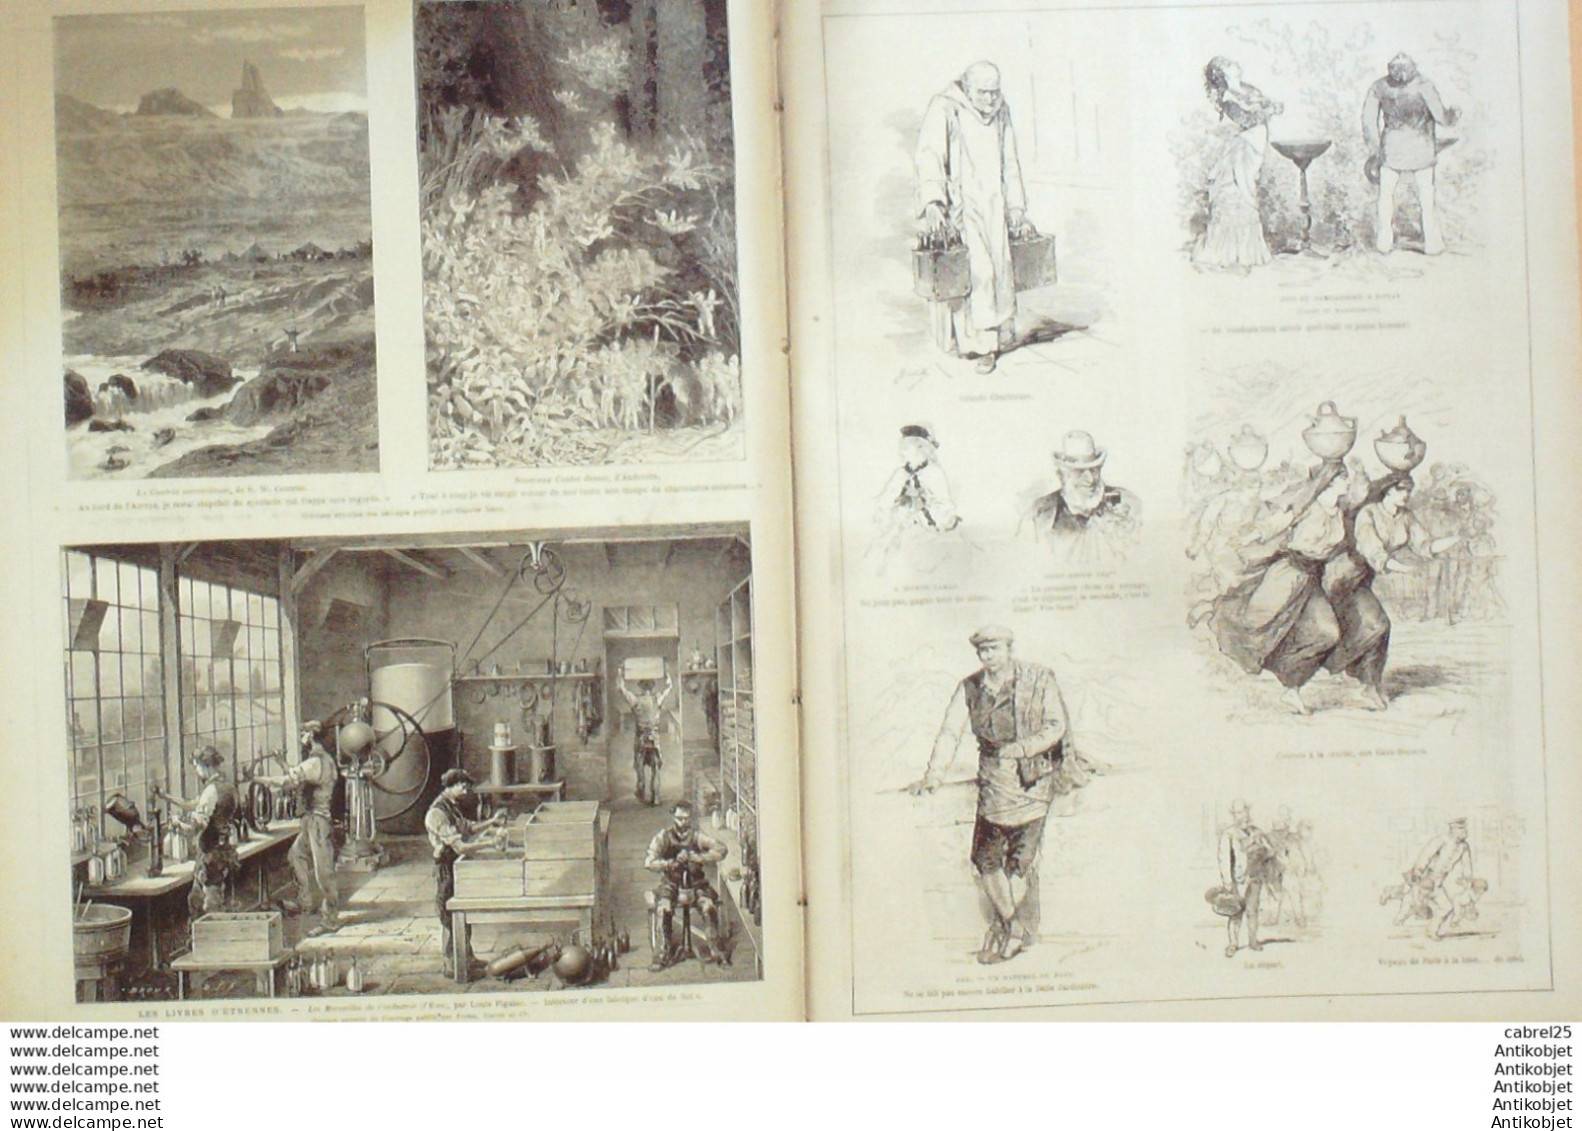 Le Monde Illustré 1875 N°975 Montreuil (93) Espagne Catalogne Le Somaten Inde Bombay Baroda Gulcowar Mahometan - 1850 - 1899